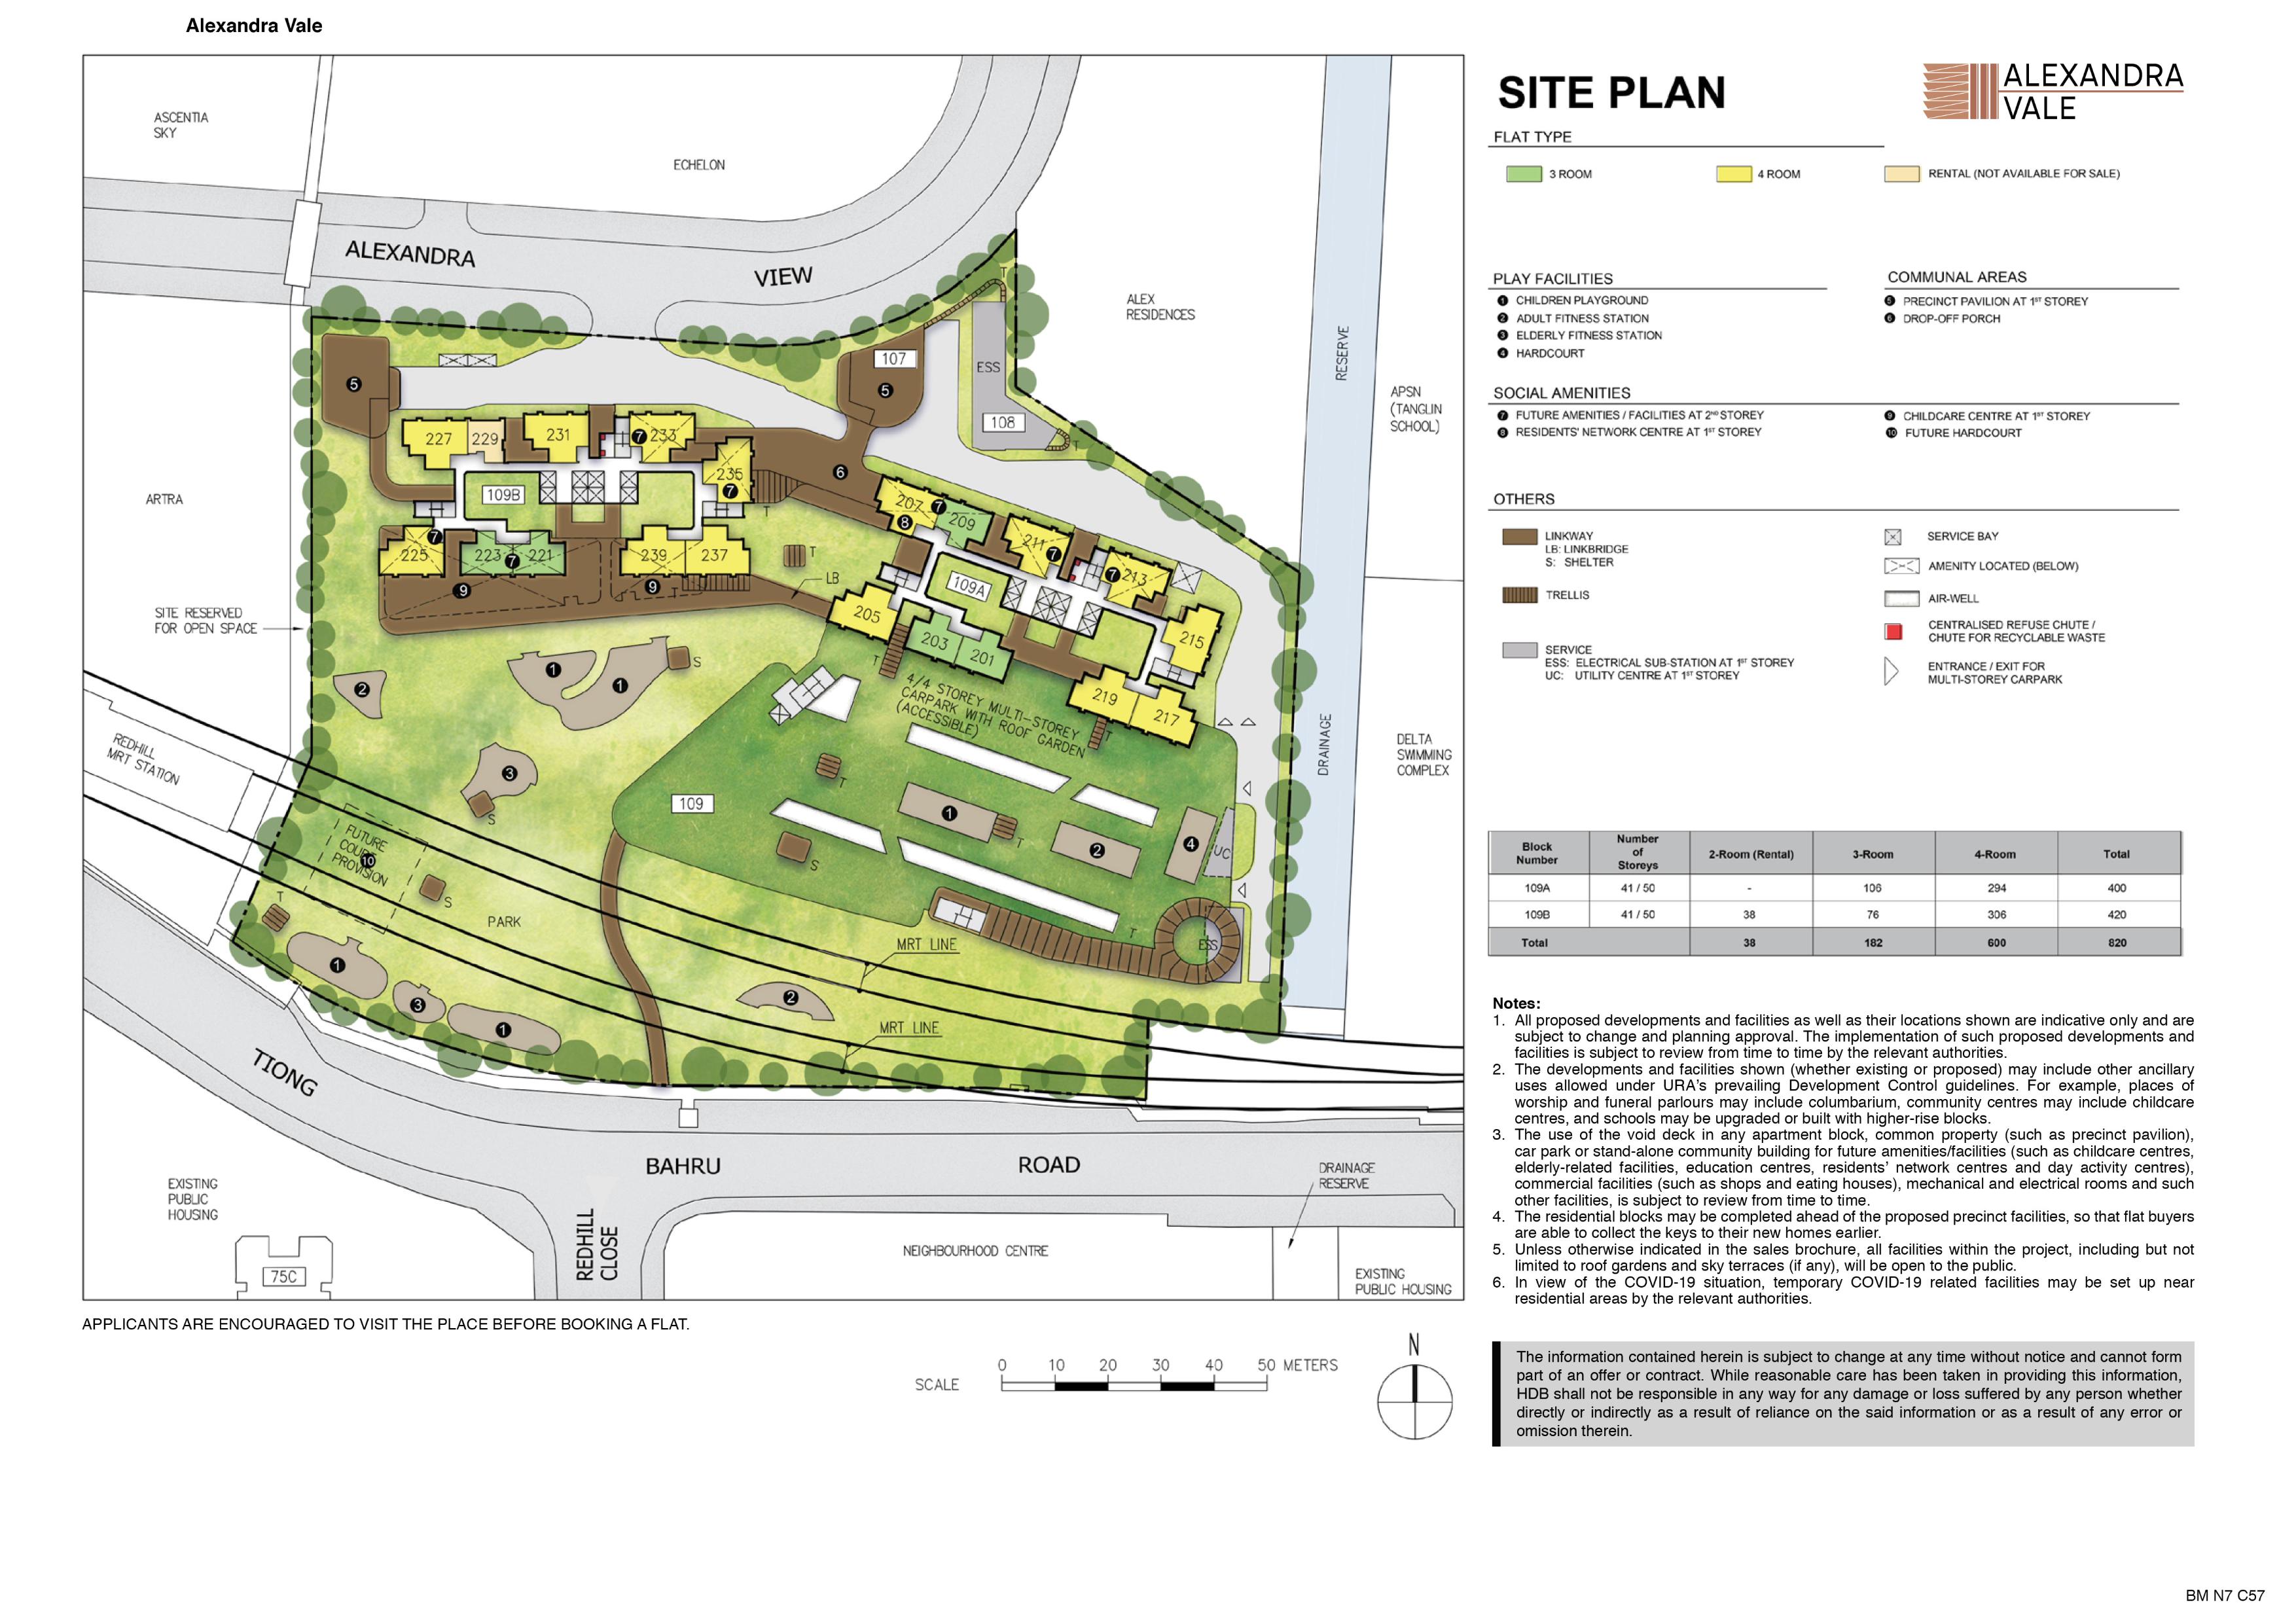 Alexandra Vale Site Plan